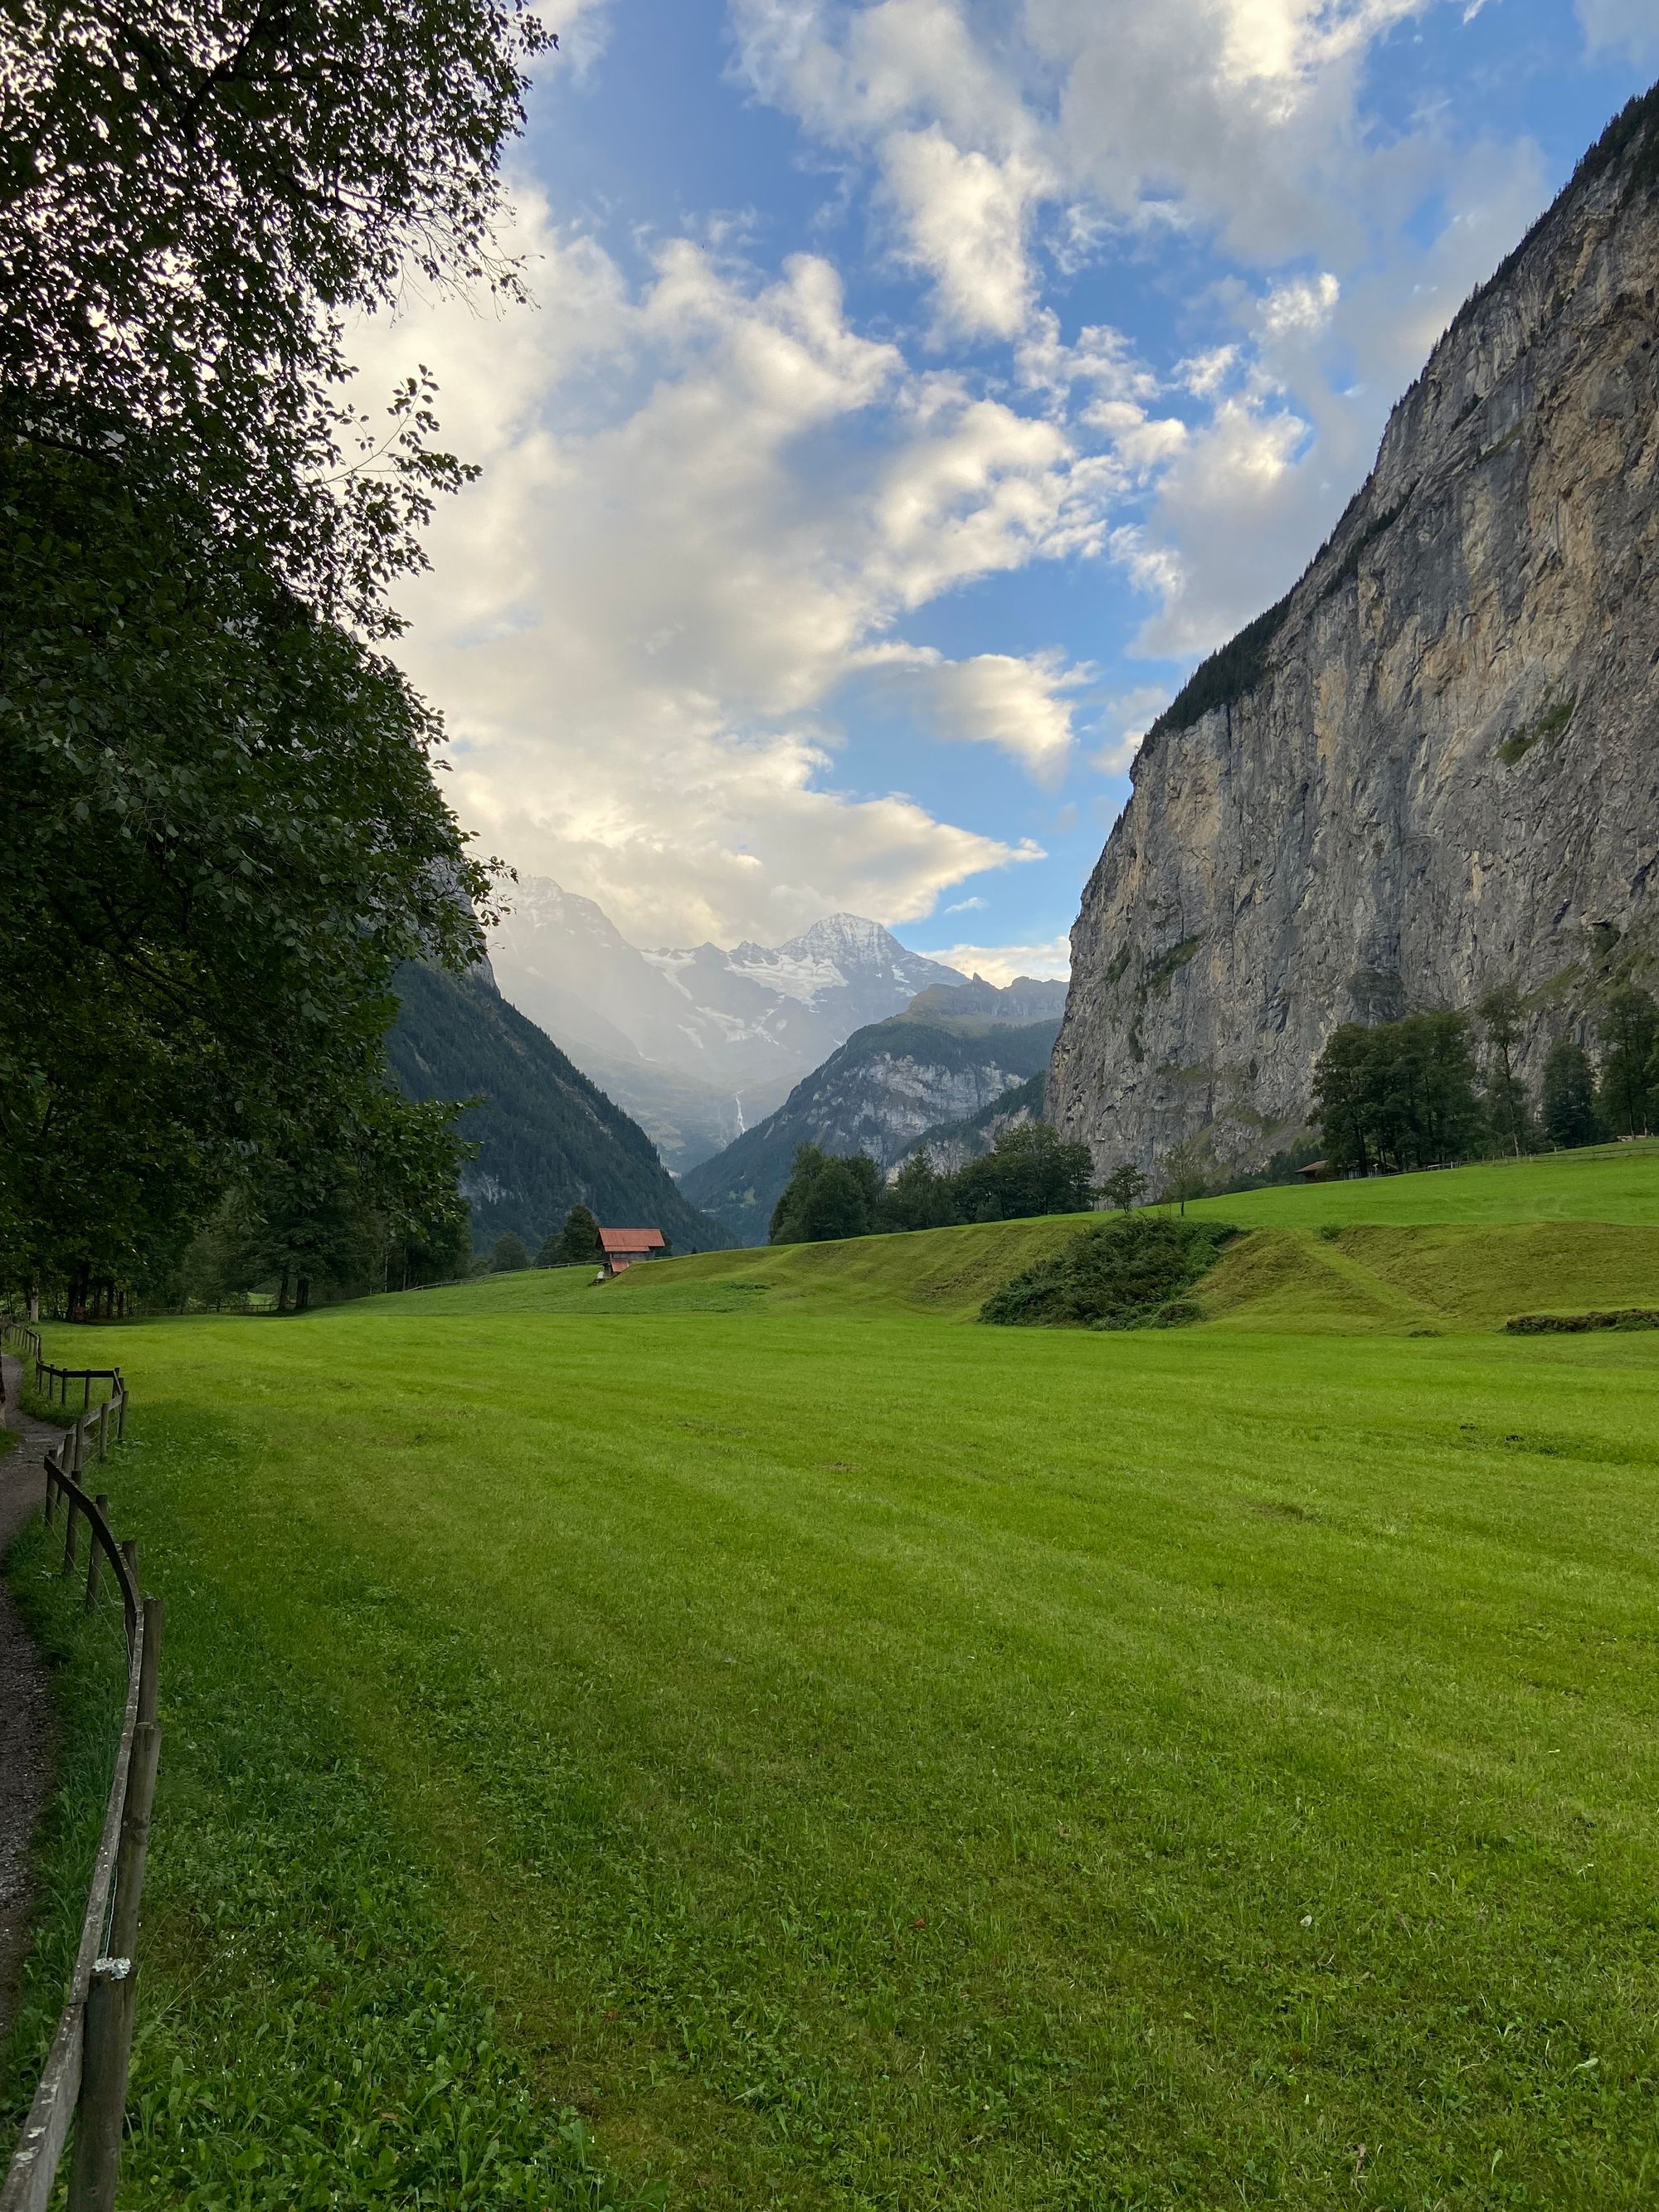 Europe 2022 - Part 1: Bernese Oberland